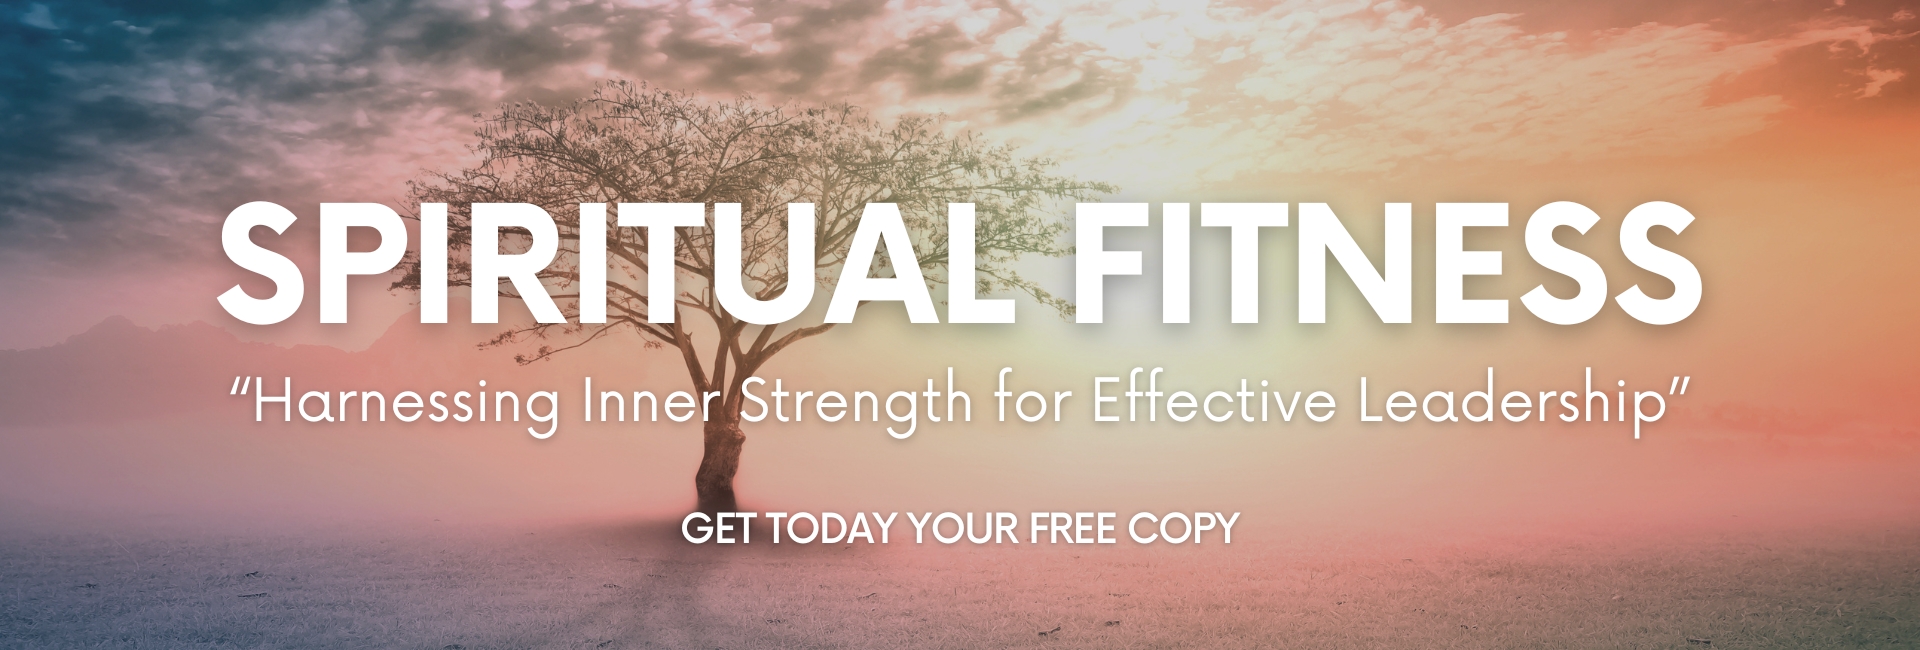 ebook spiritual fitness leadership